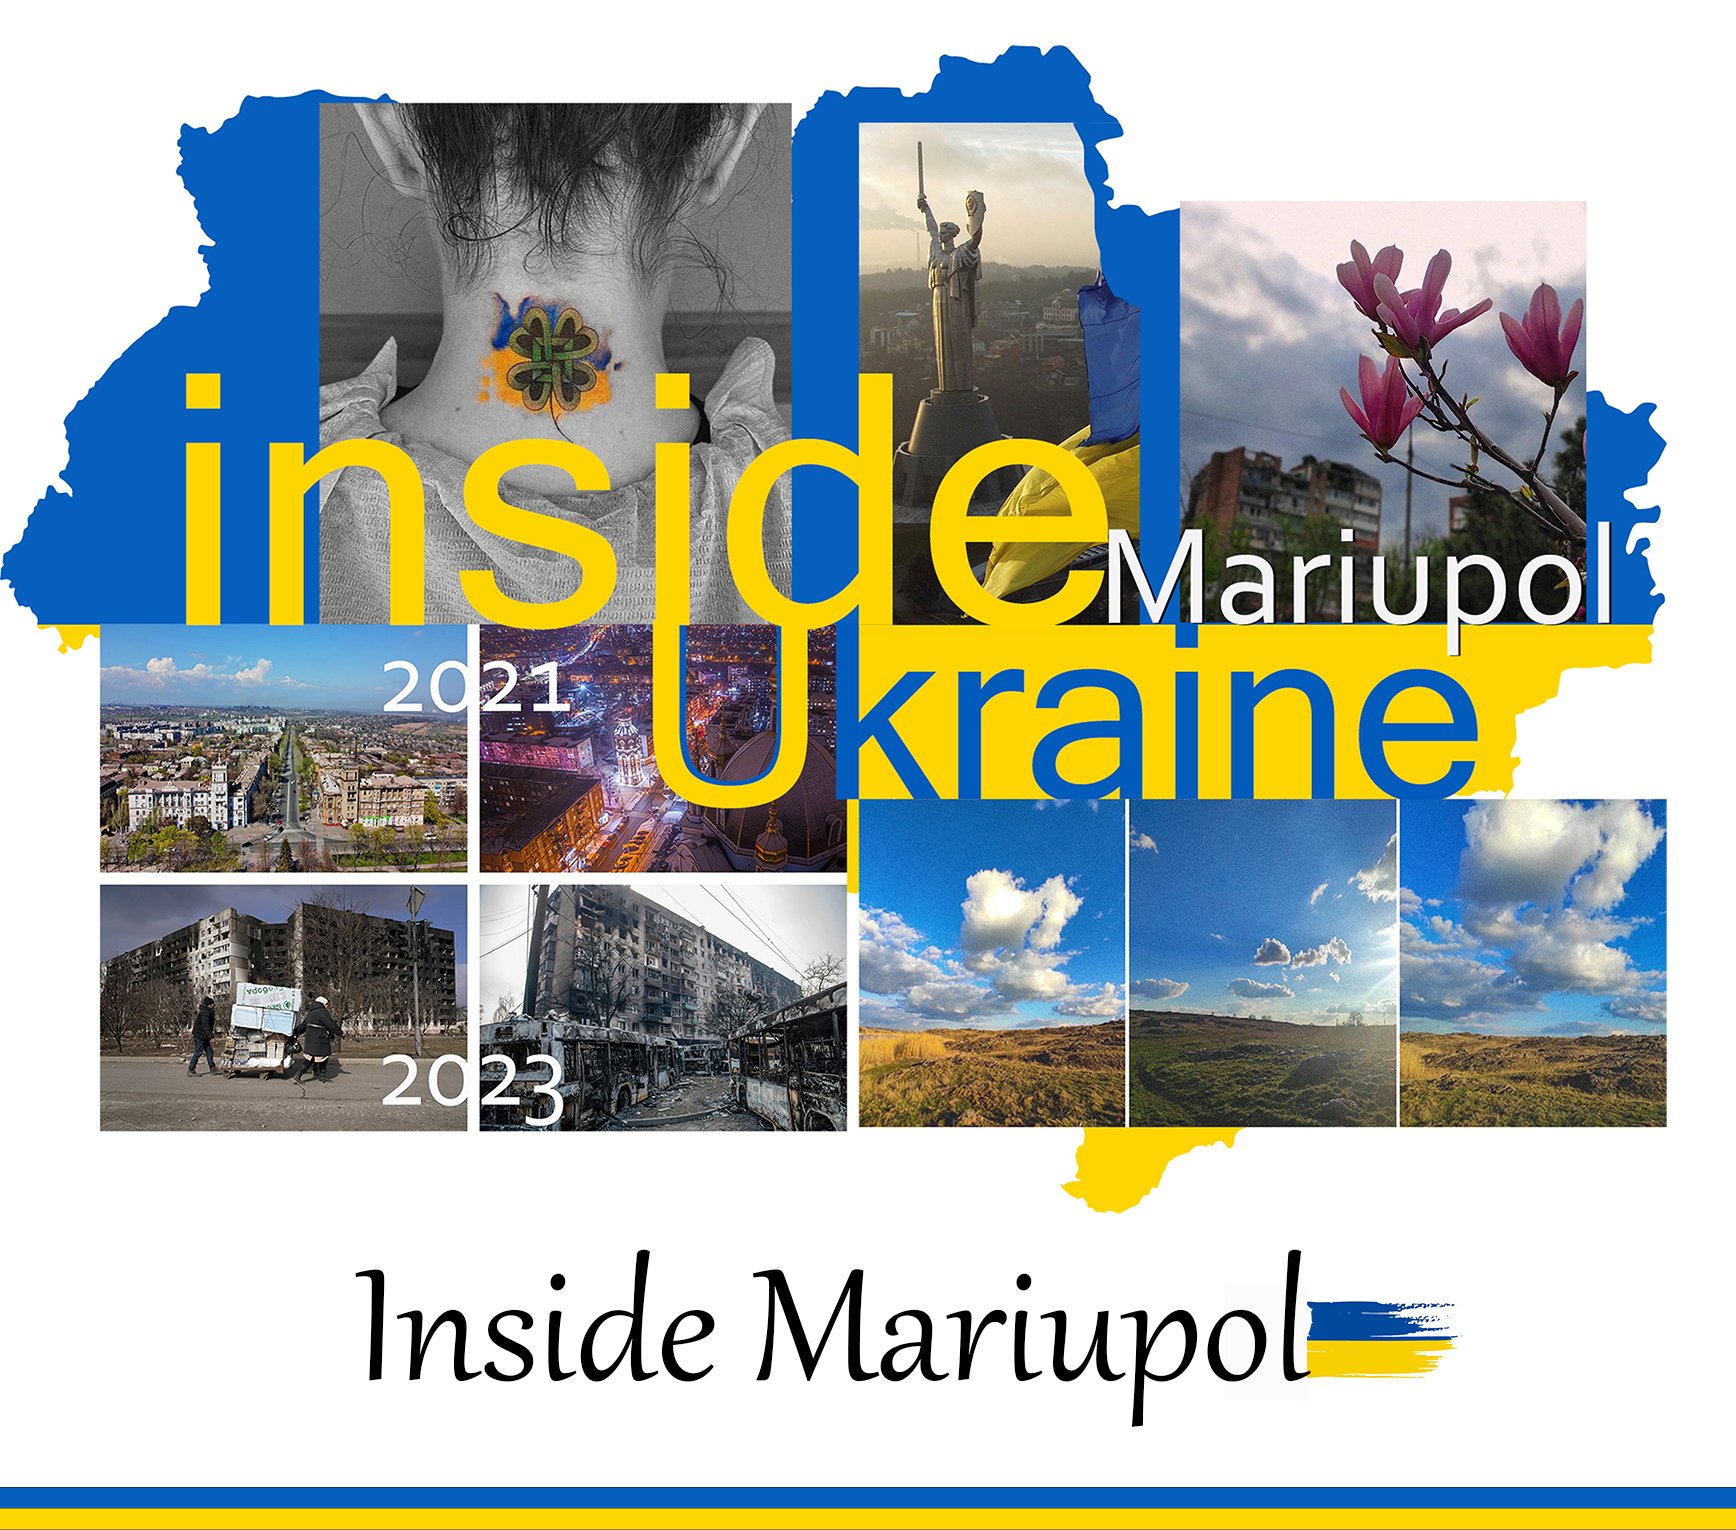 Nadiya - Translator, Ukrainian, Survivor, Mariupol,&nbsp;Ukraine